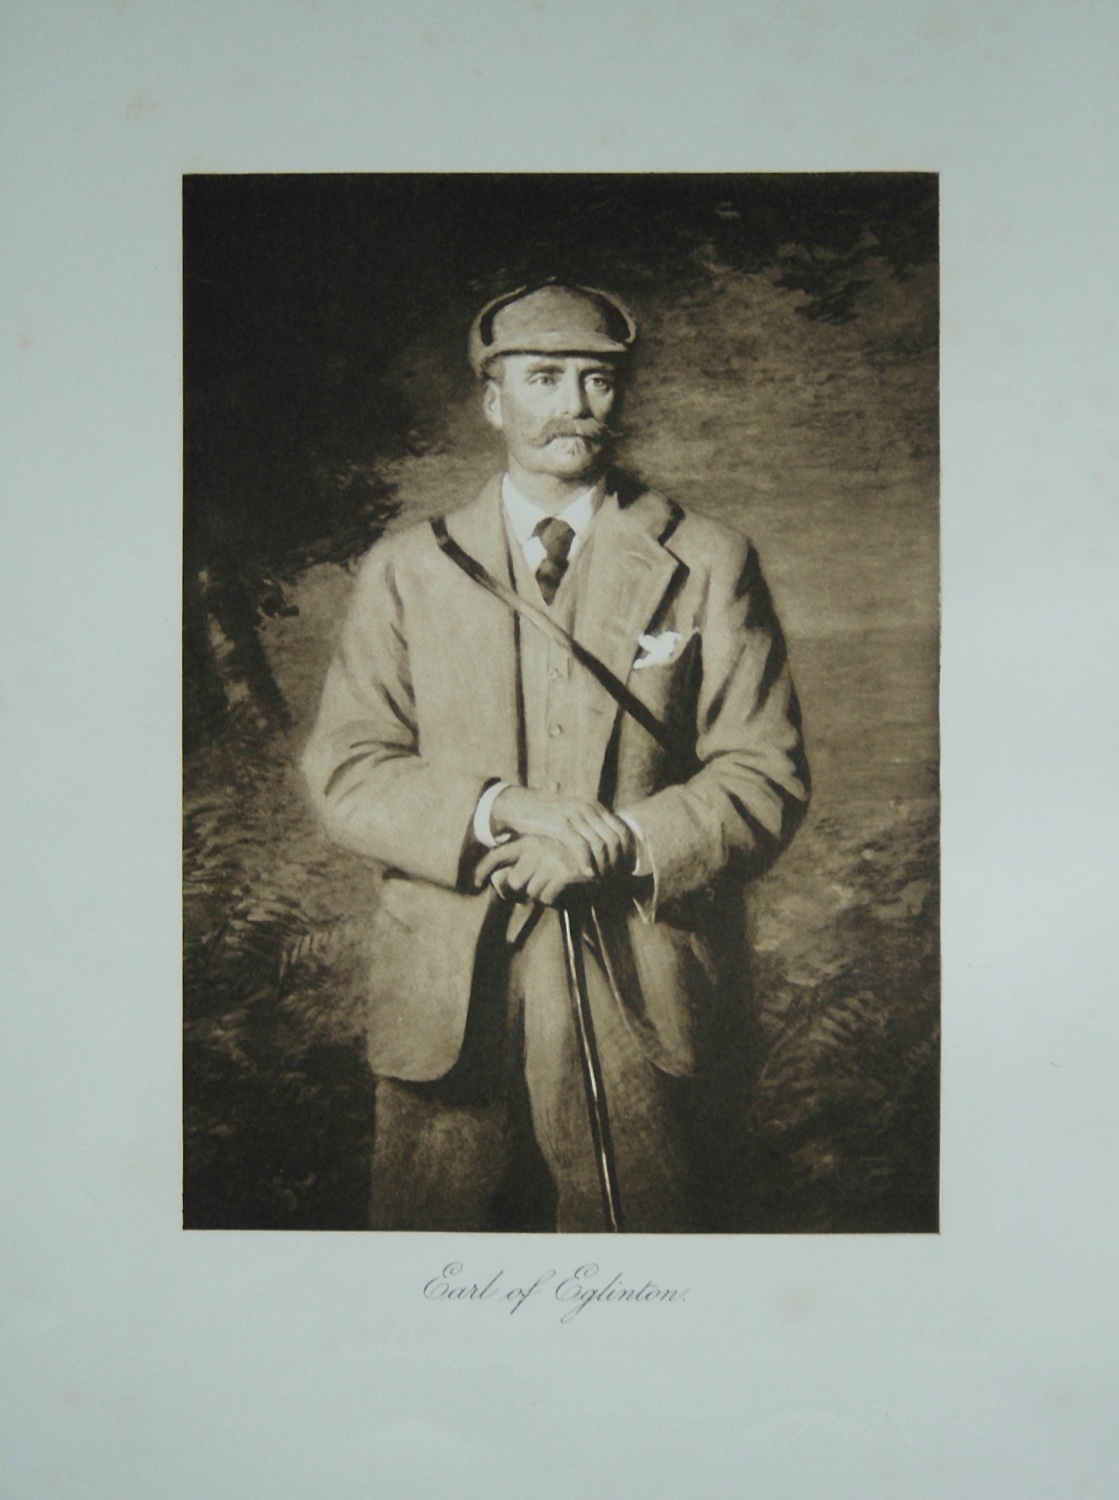 Earl of Eglinton. 1912